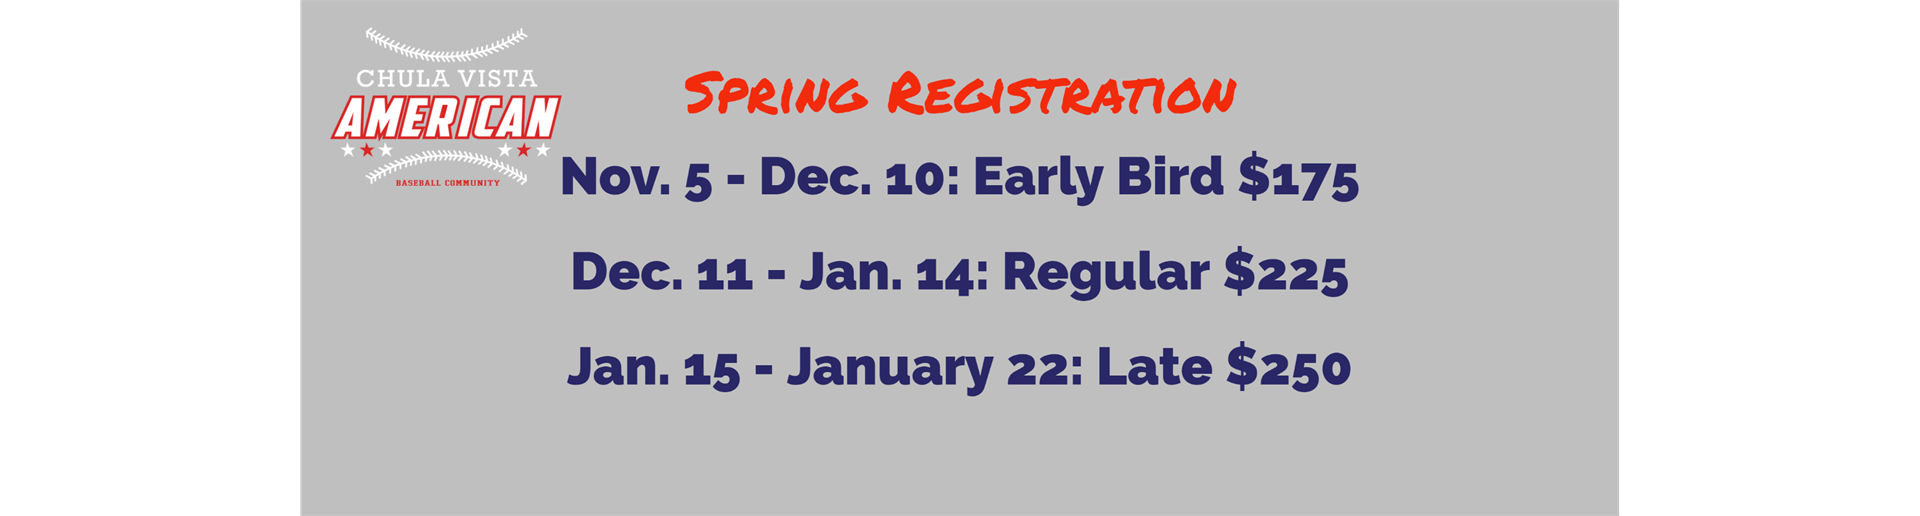 Spring Registration Information